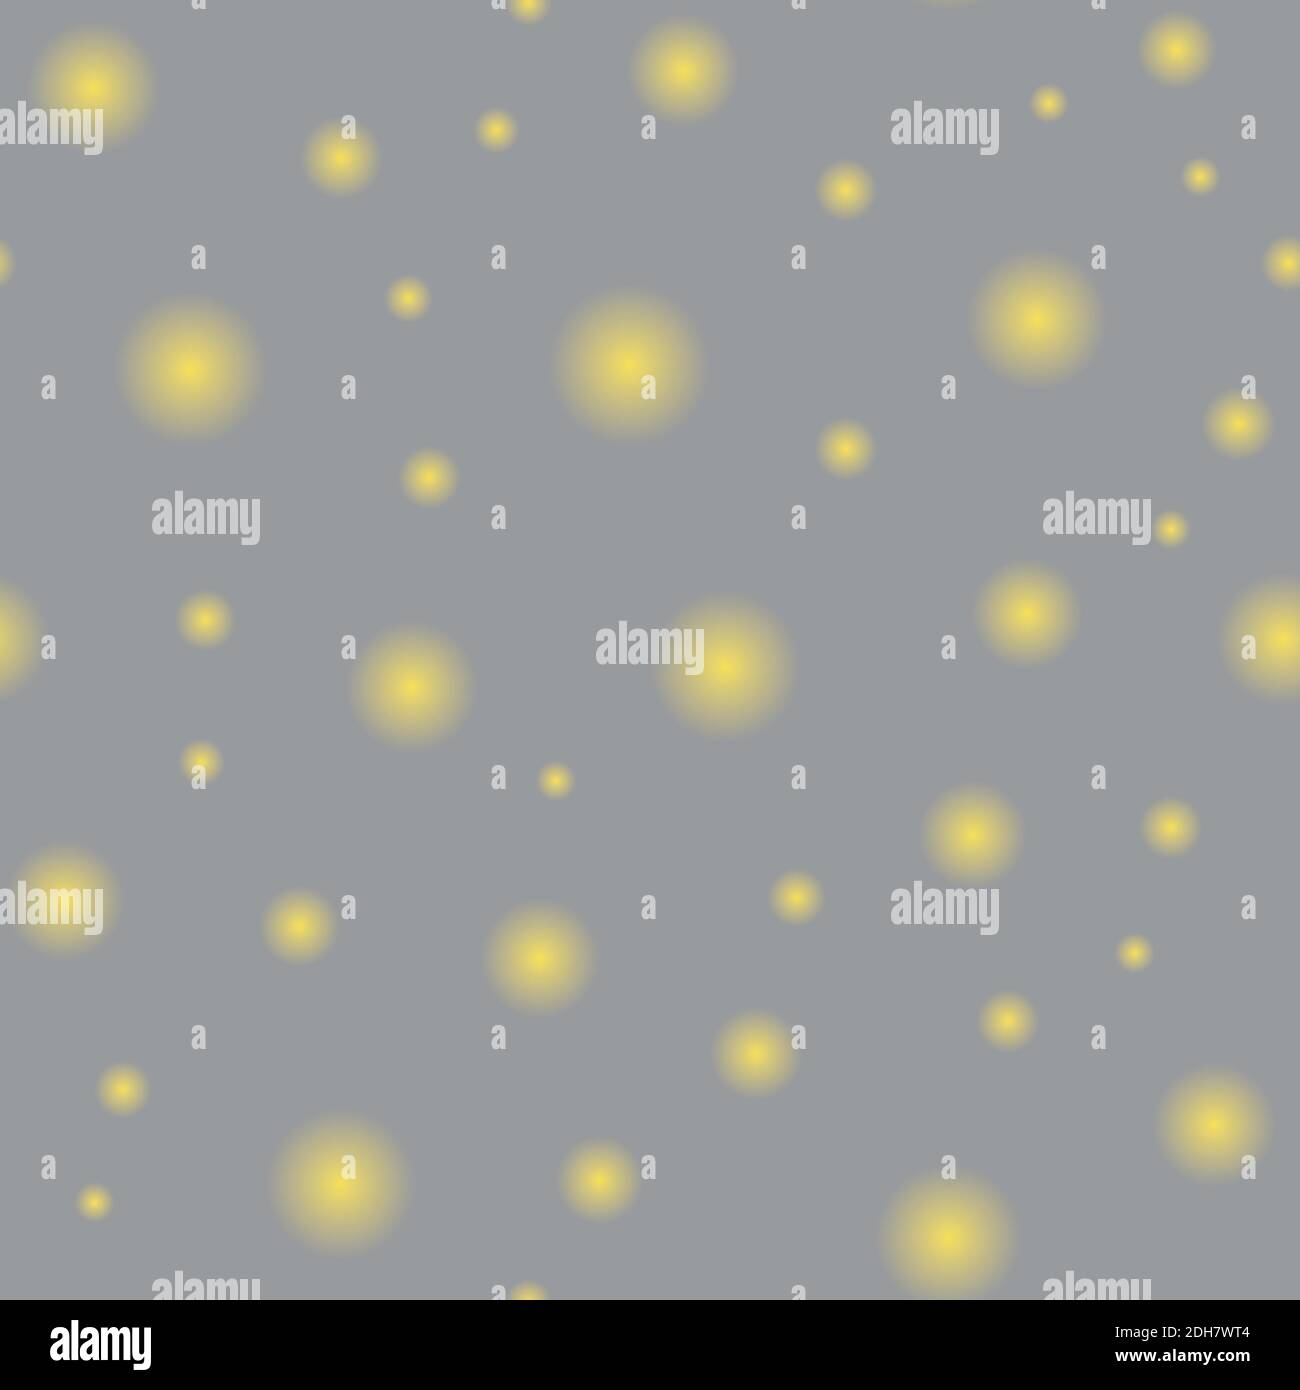 yellow glowing fireflies seamless vector pattern Stock Vector